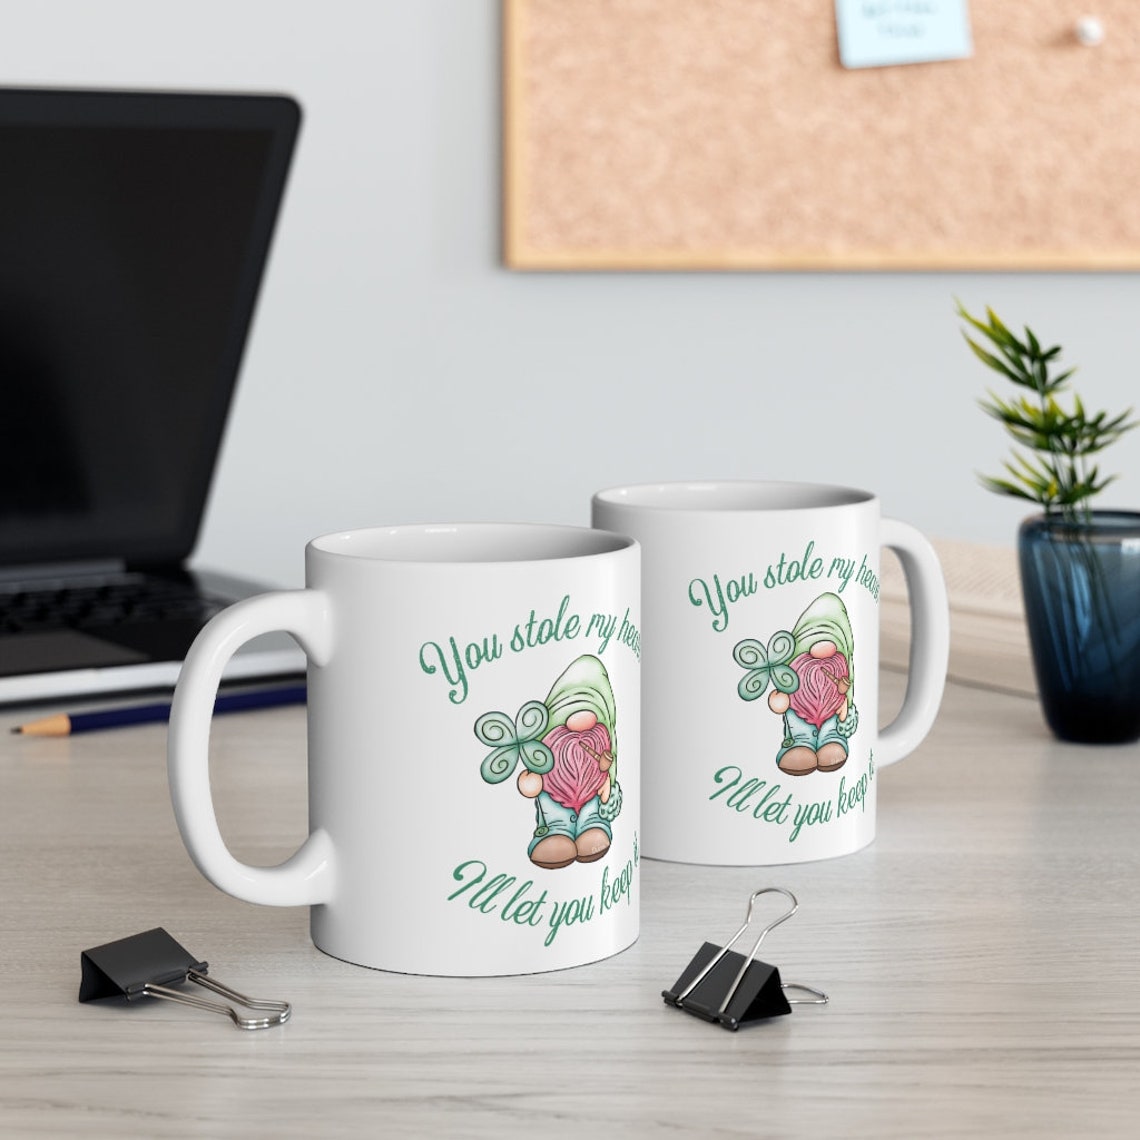 I'll Let You Keep It - St. Patrick's Day Gnome Mug